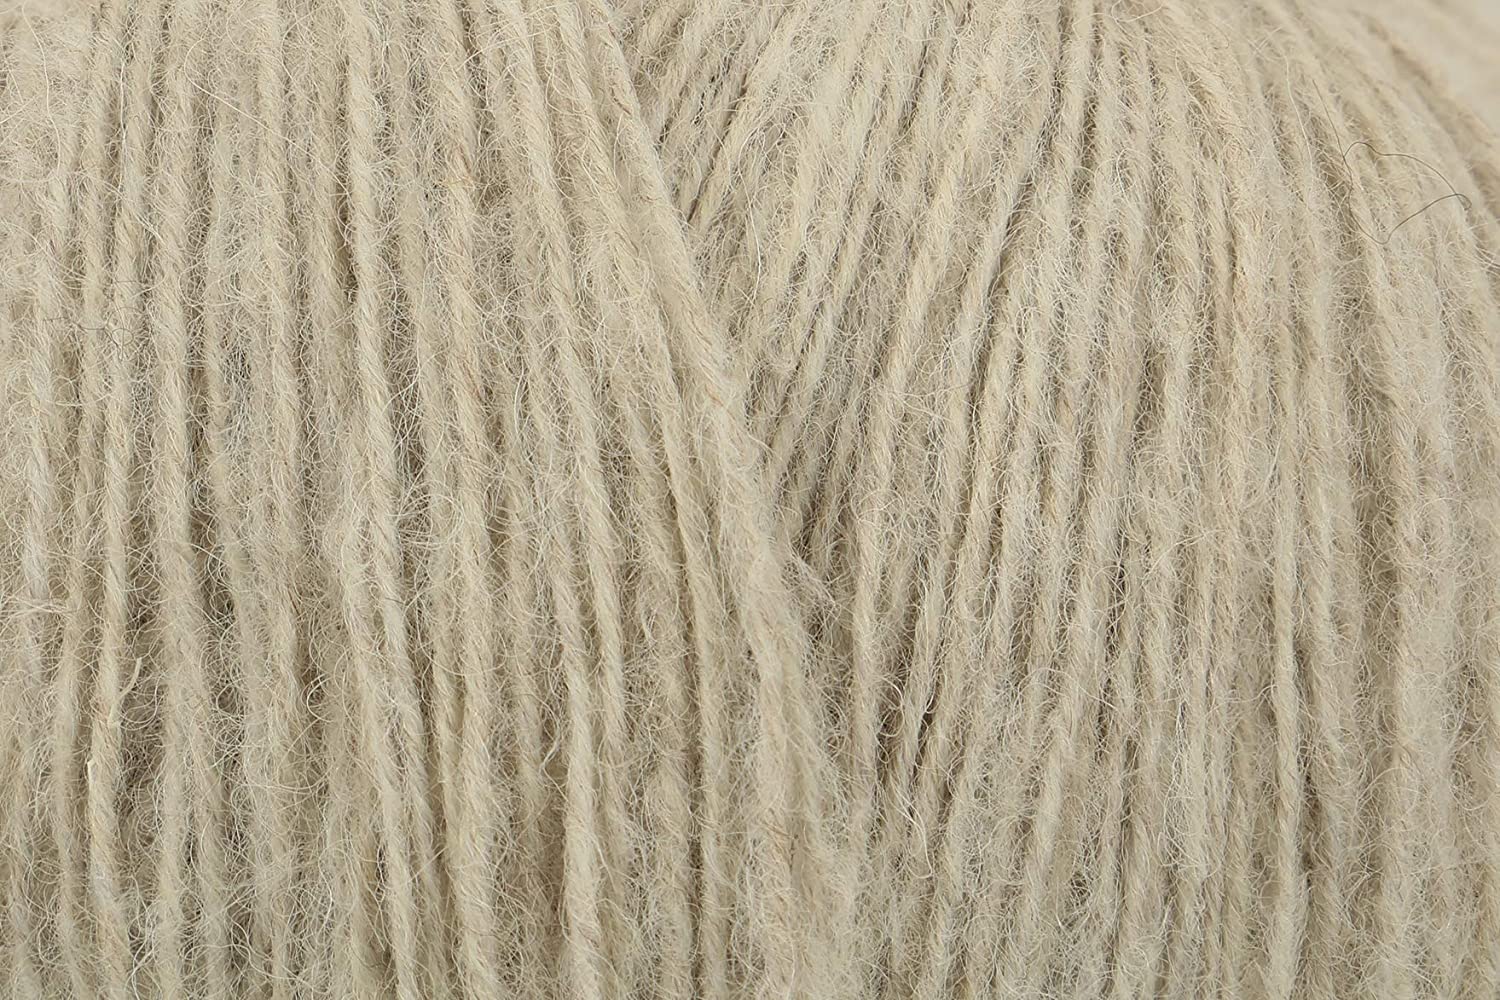 Regia Hand Knitting Yarn 14 x 13 x 7 cm 15% Alpaca 23% Polyamide Anthracite Mottled 62% Wool